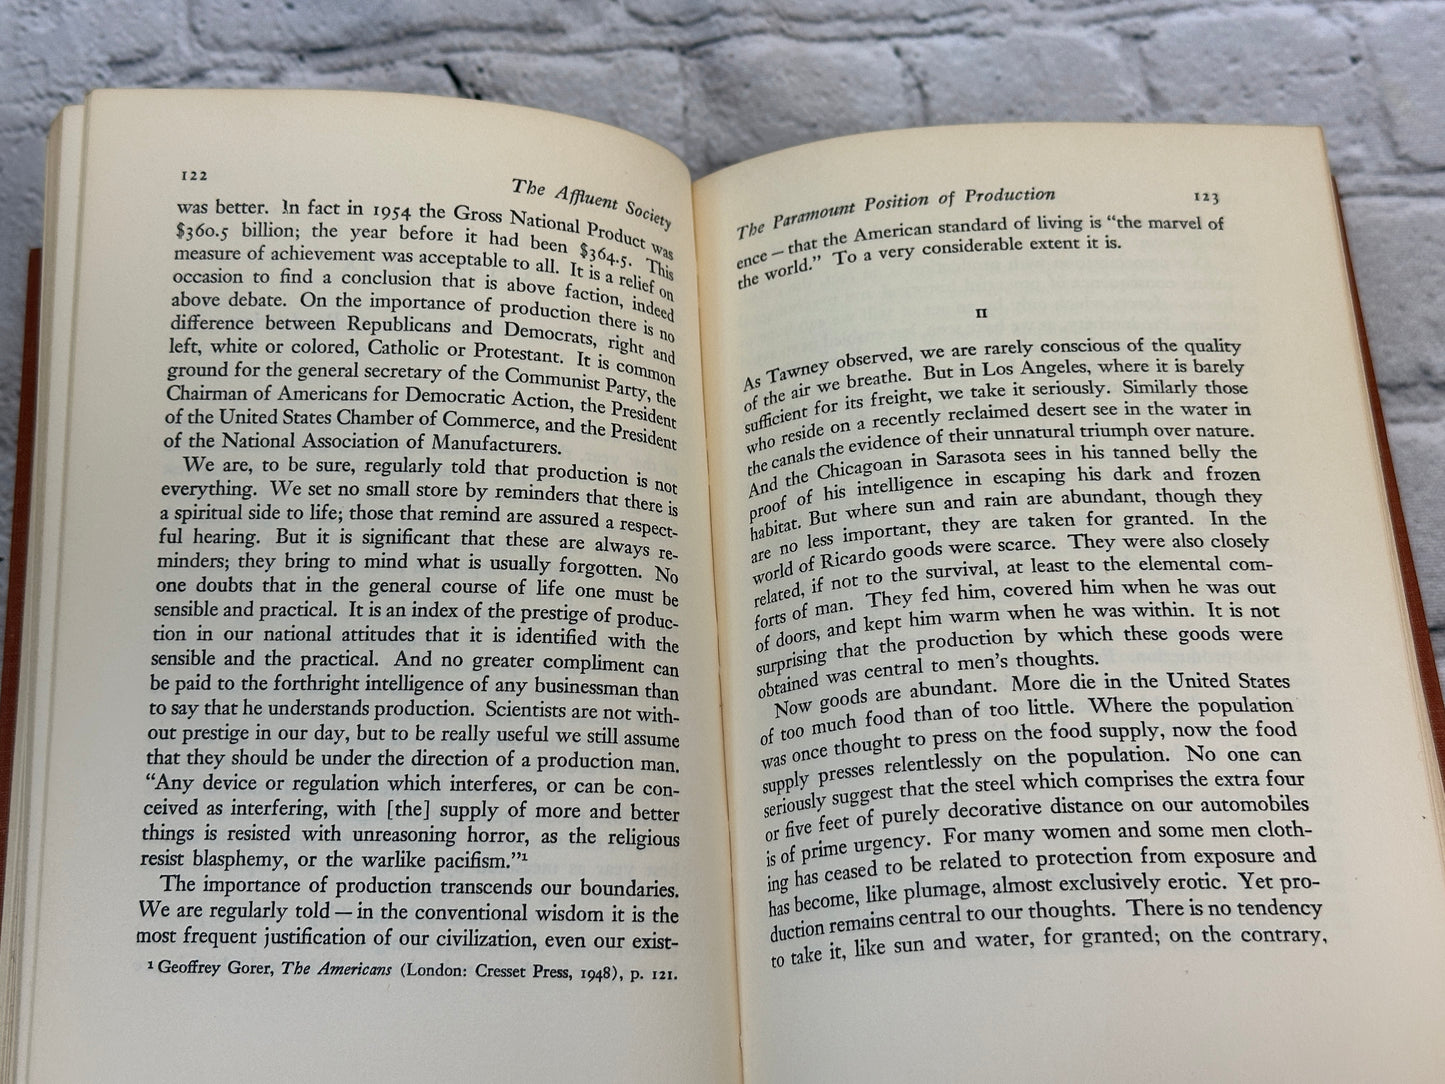 The Affluent Society, by John Kenneth Galbraith [1958 · 11th Printing]